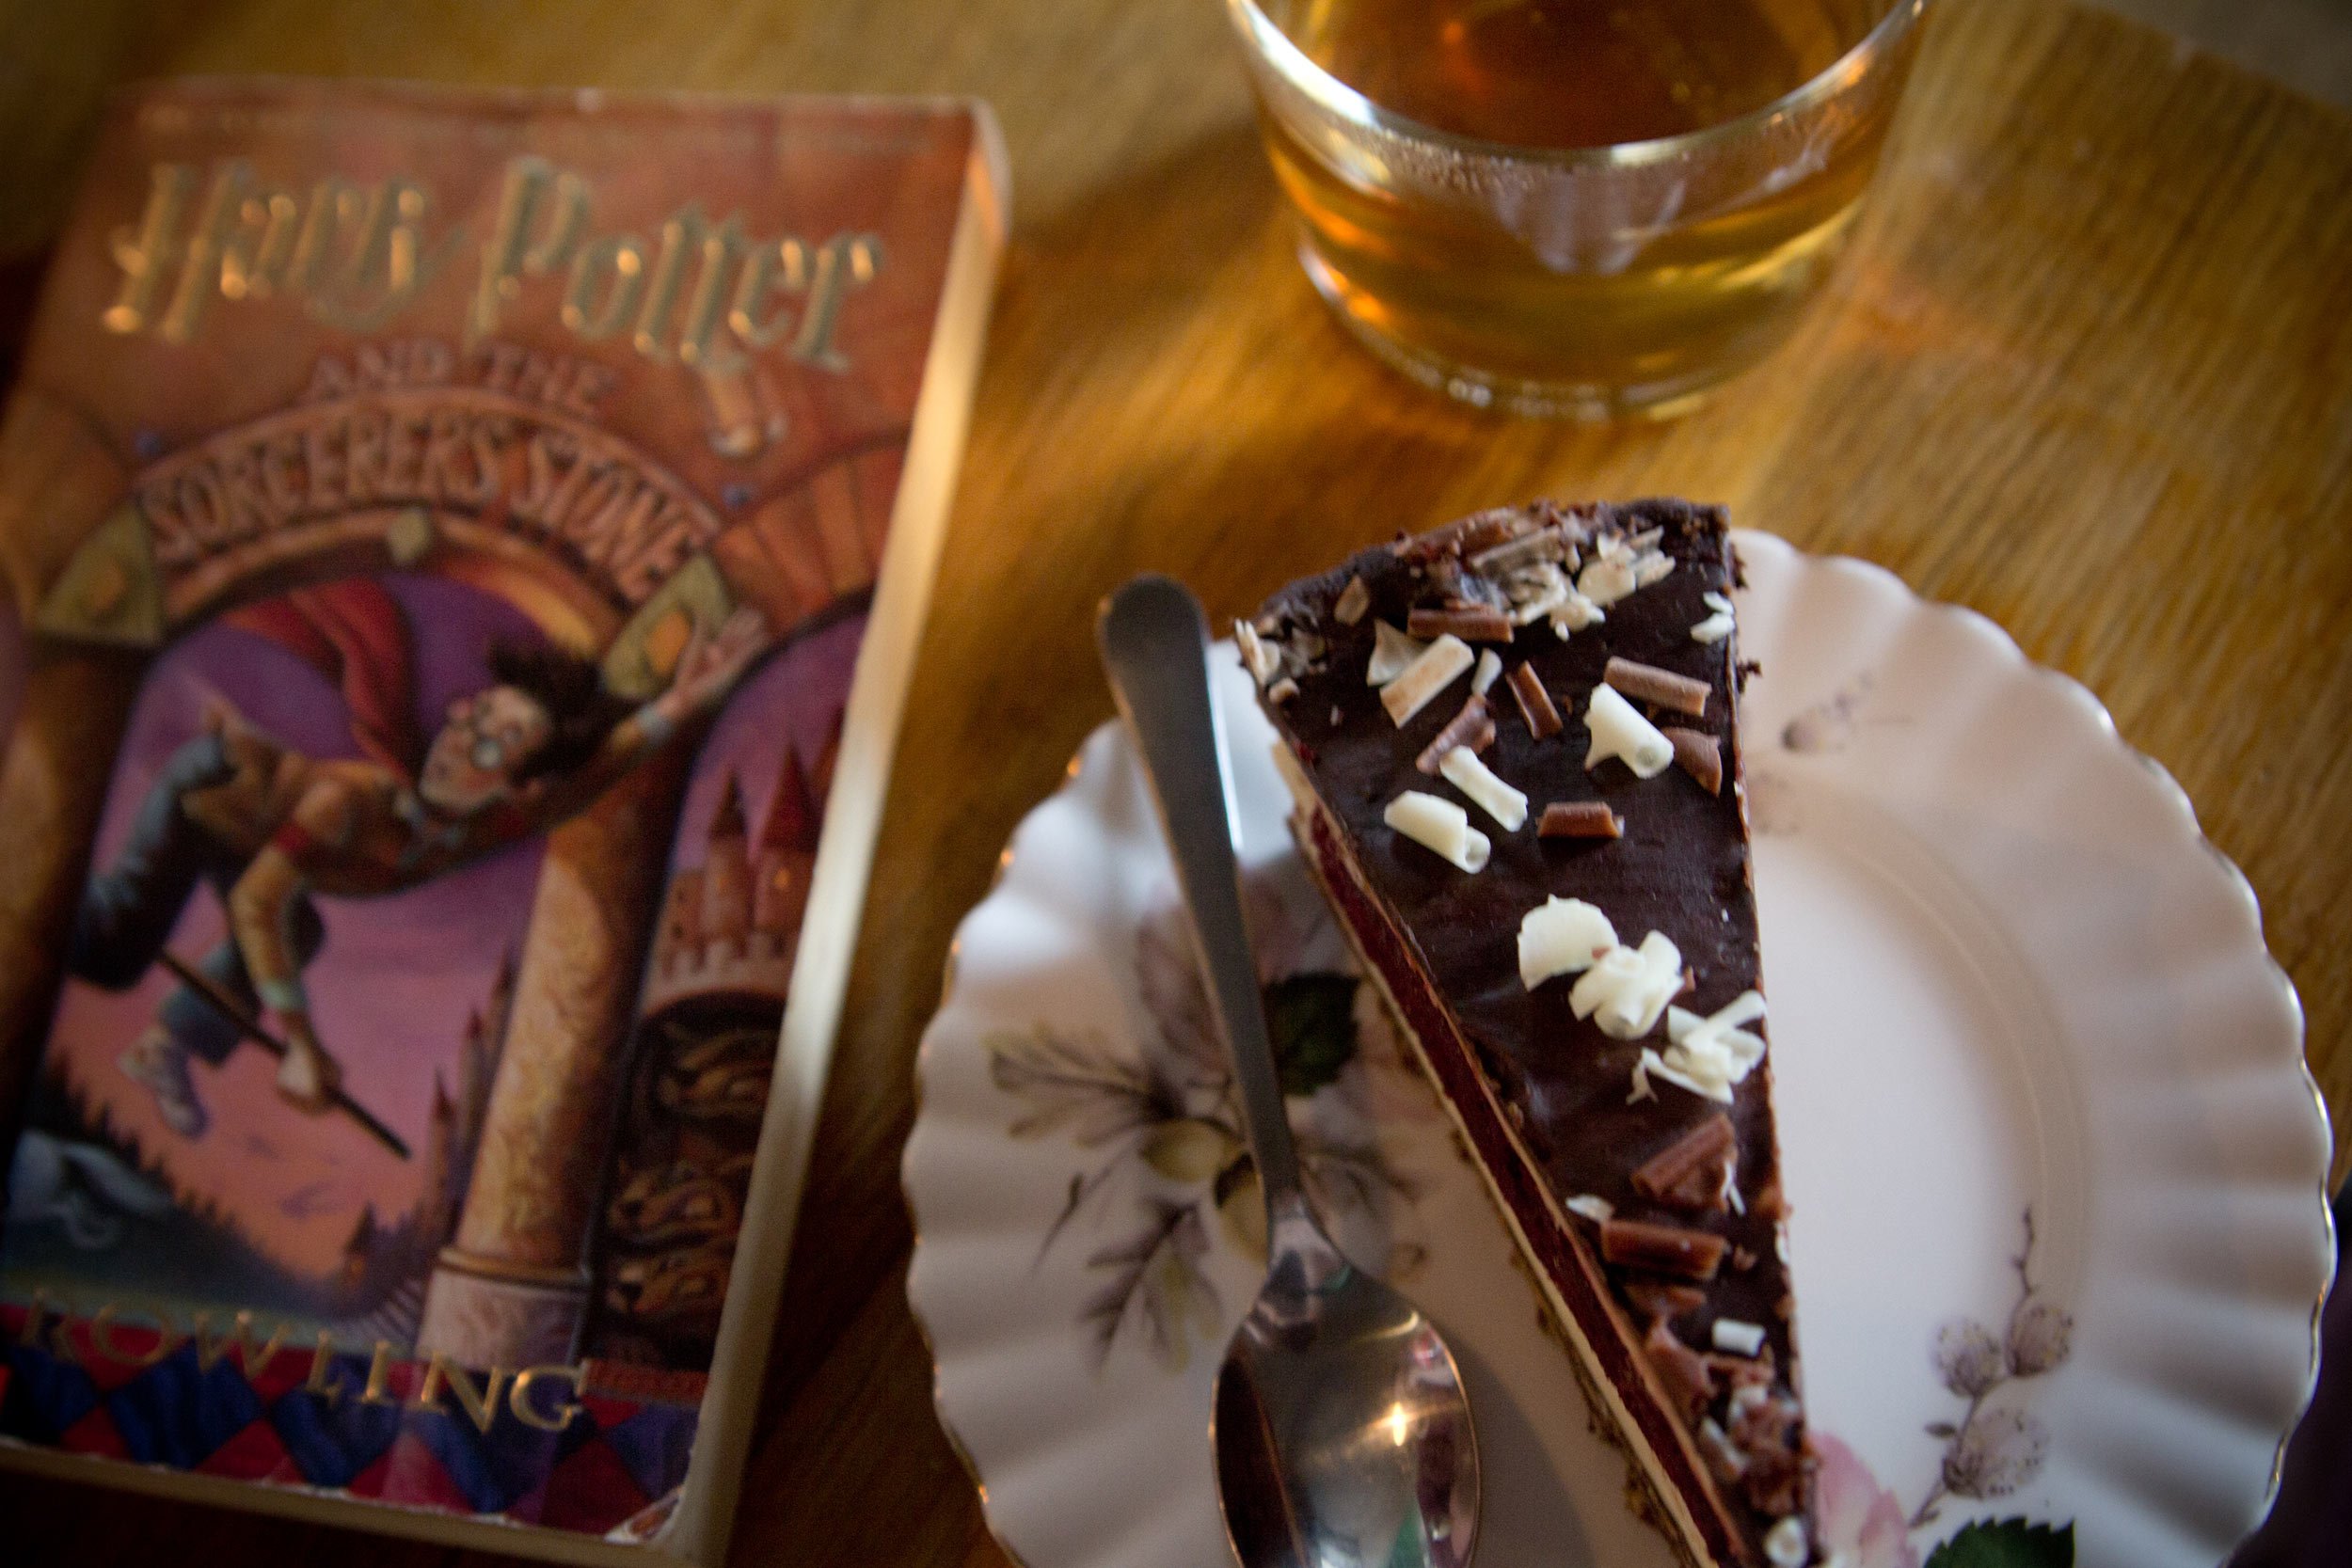 harry-potter-book-and-cheesecake-at-nicolsons-pub-edinburgh